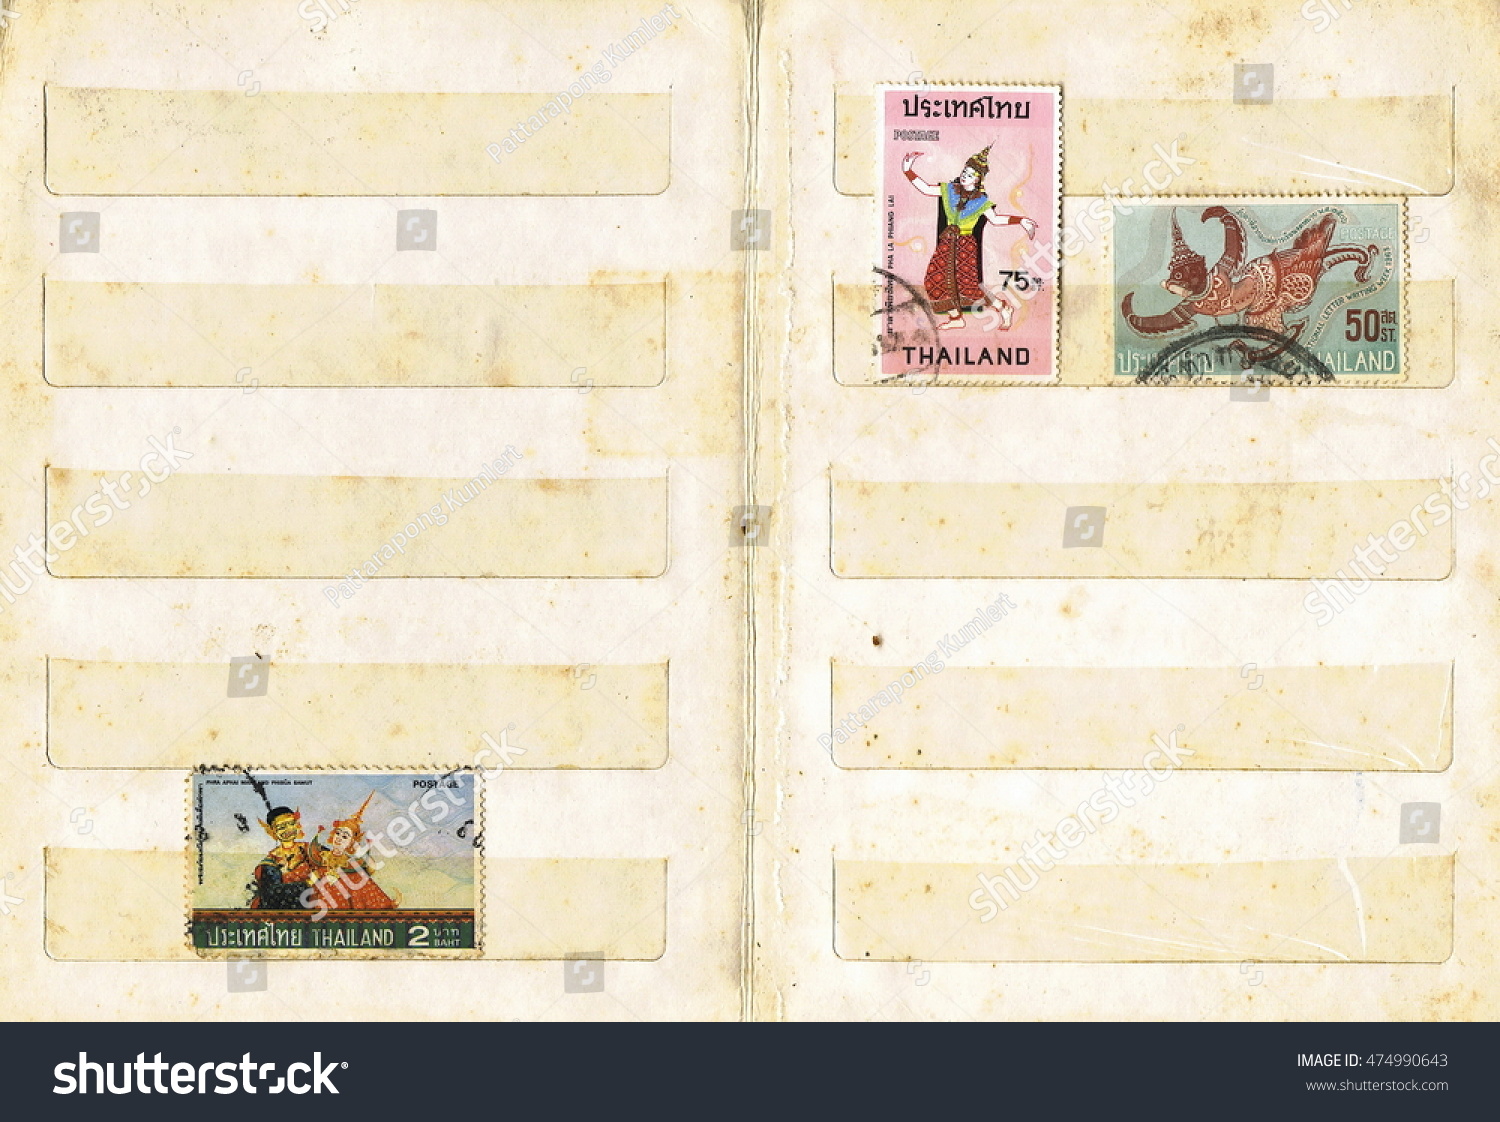 Old Stamp Album Background Texture Stock Illustration 474990643